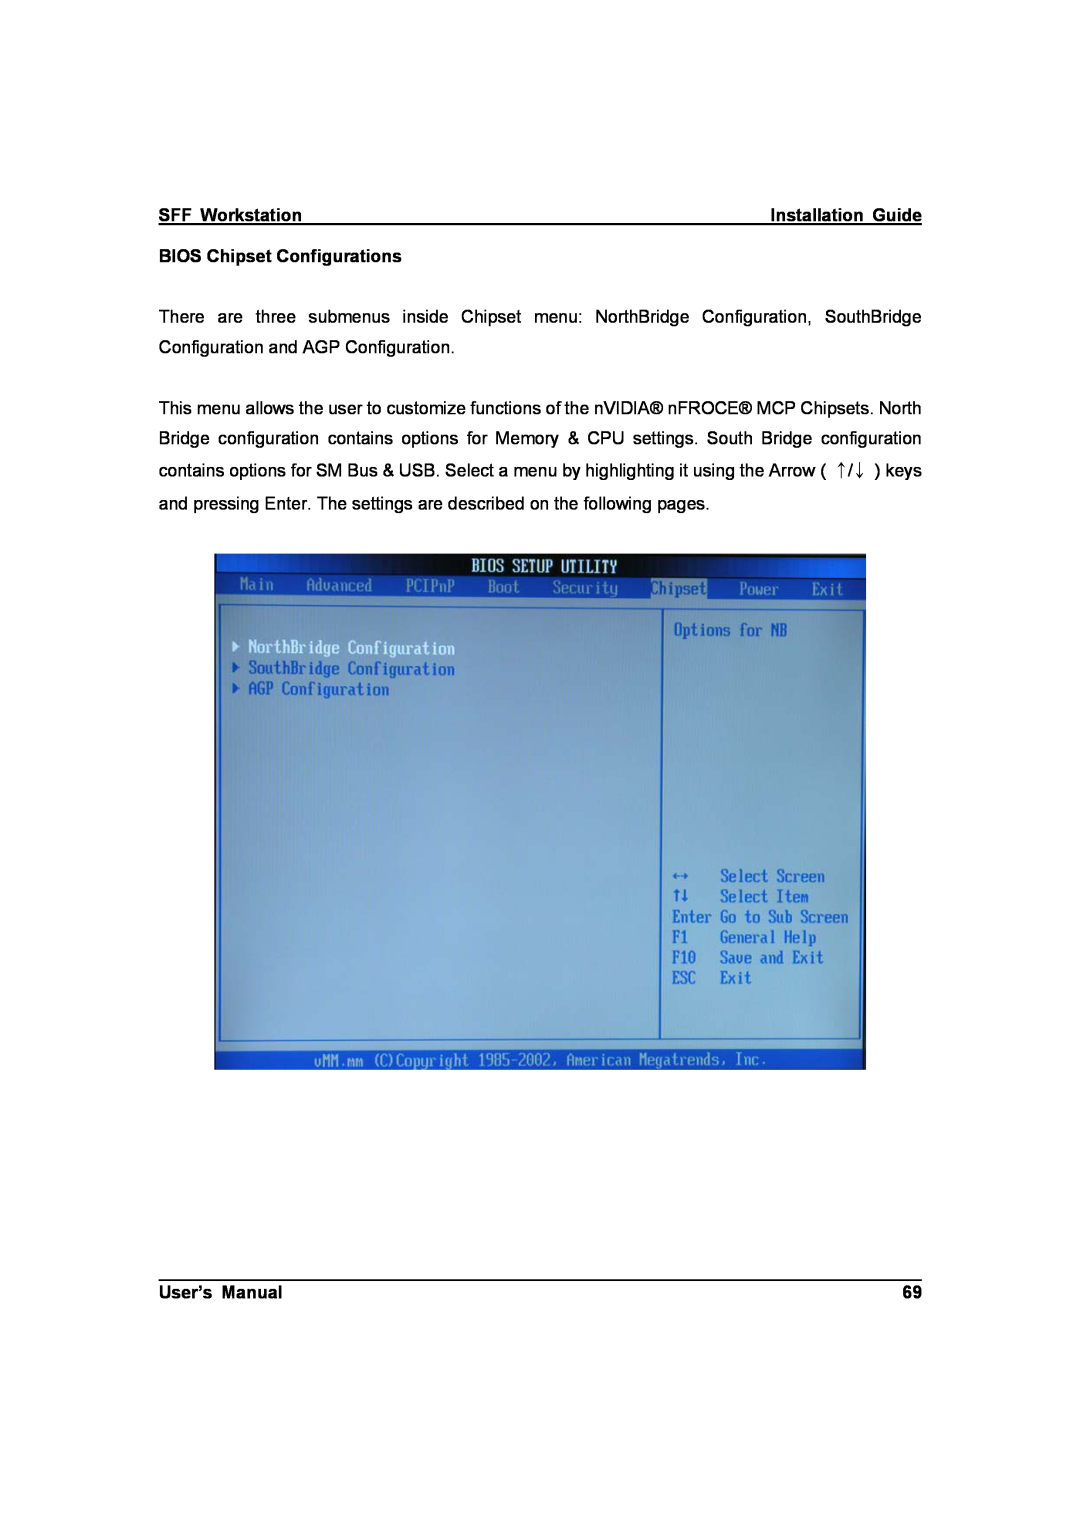 IBM ZMAXdp user manual SFF Workstation, BIOS Chipset Configurations, User’s Manual 